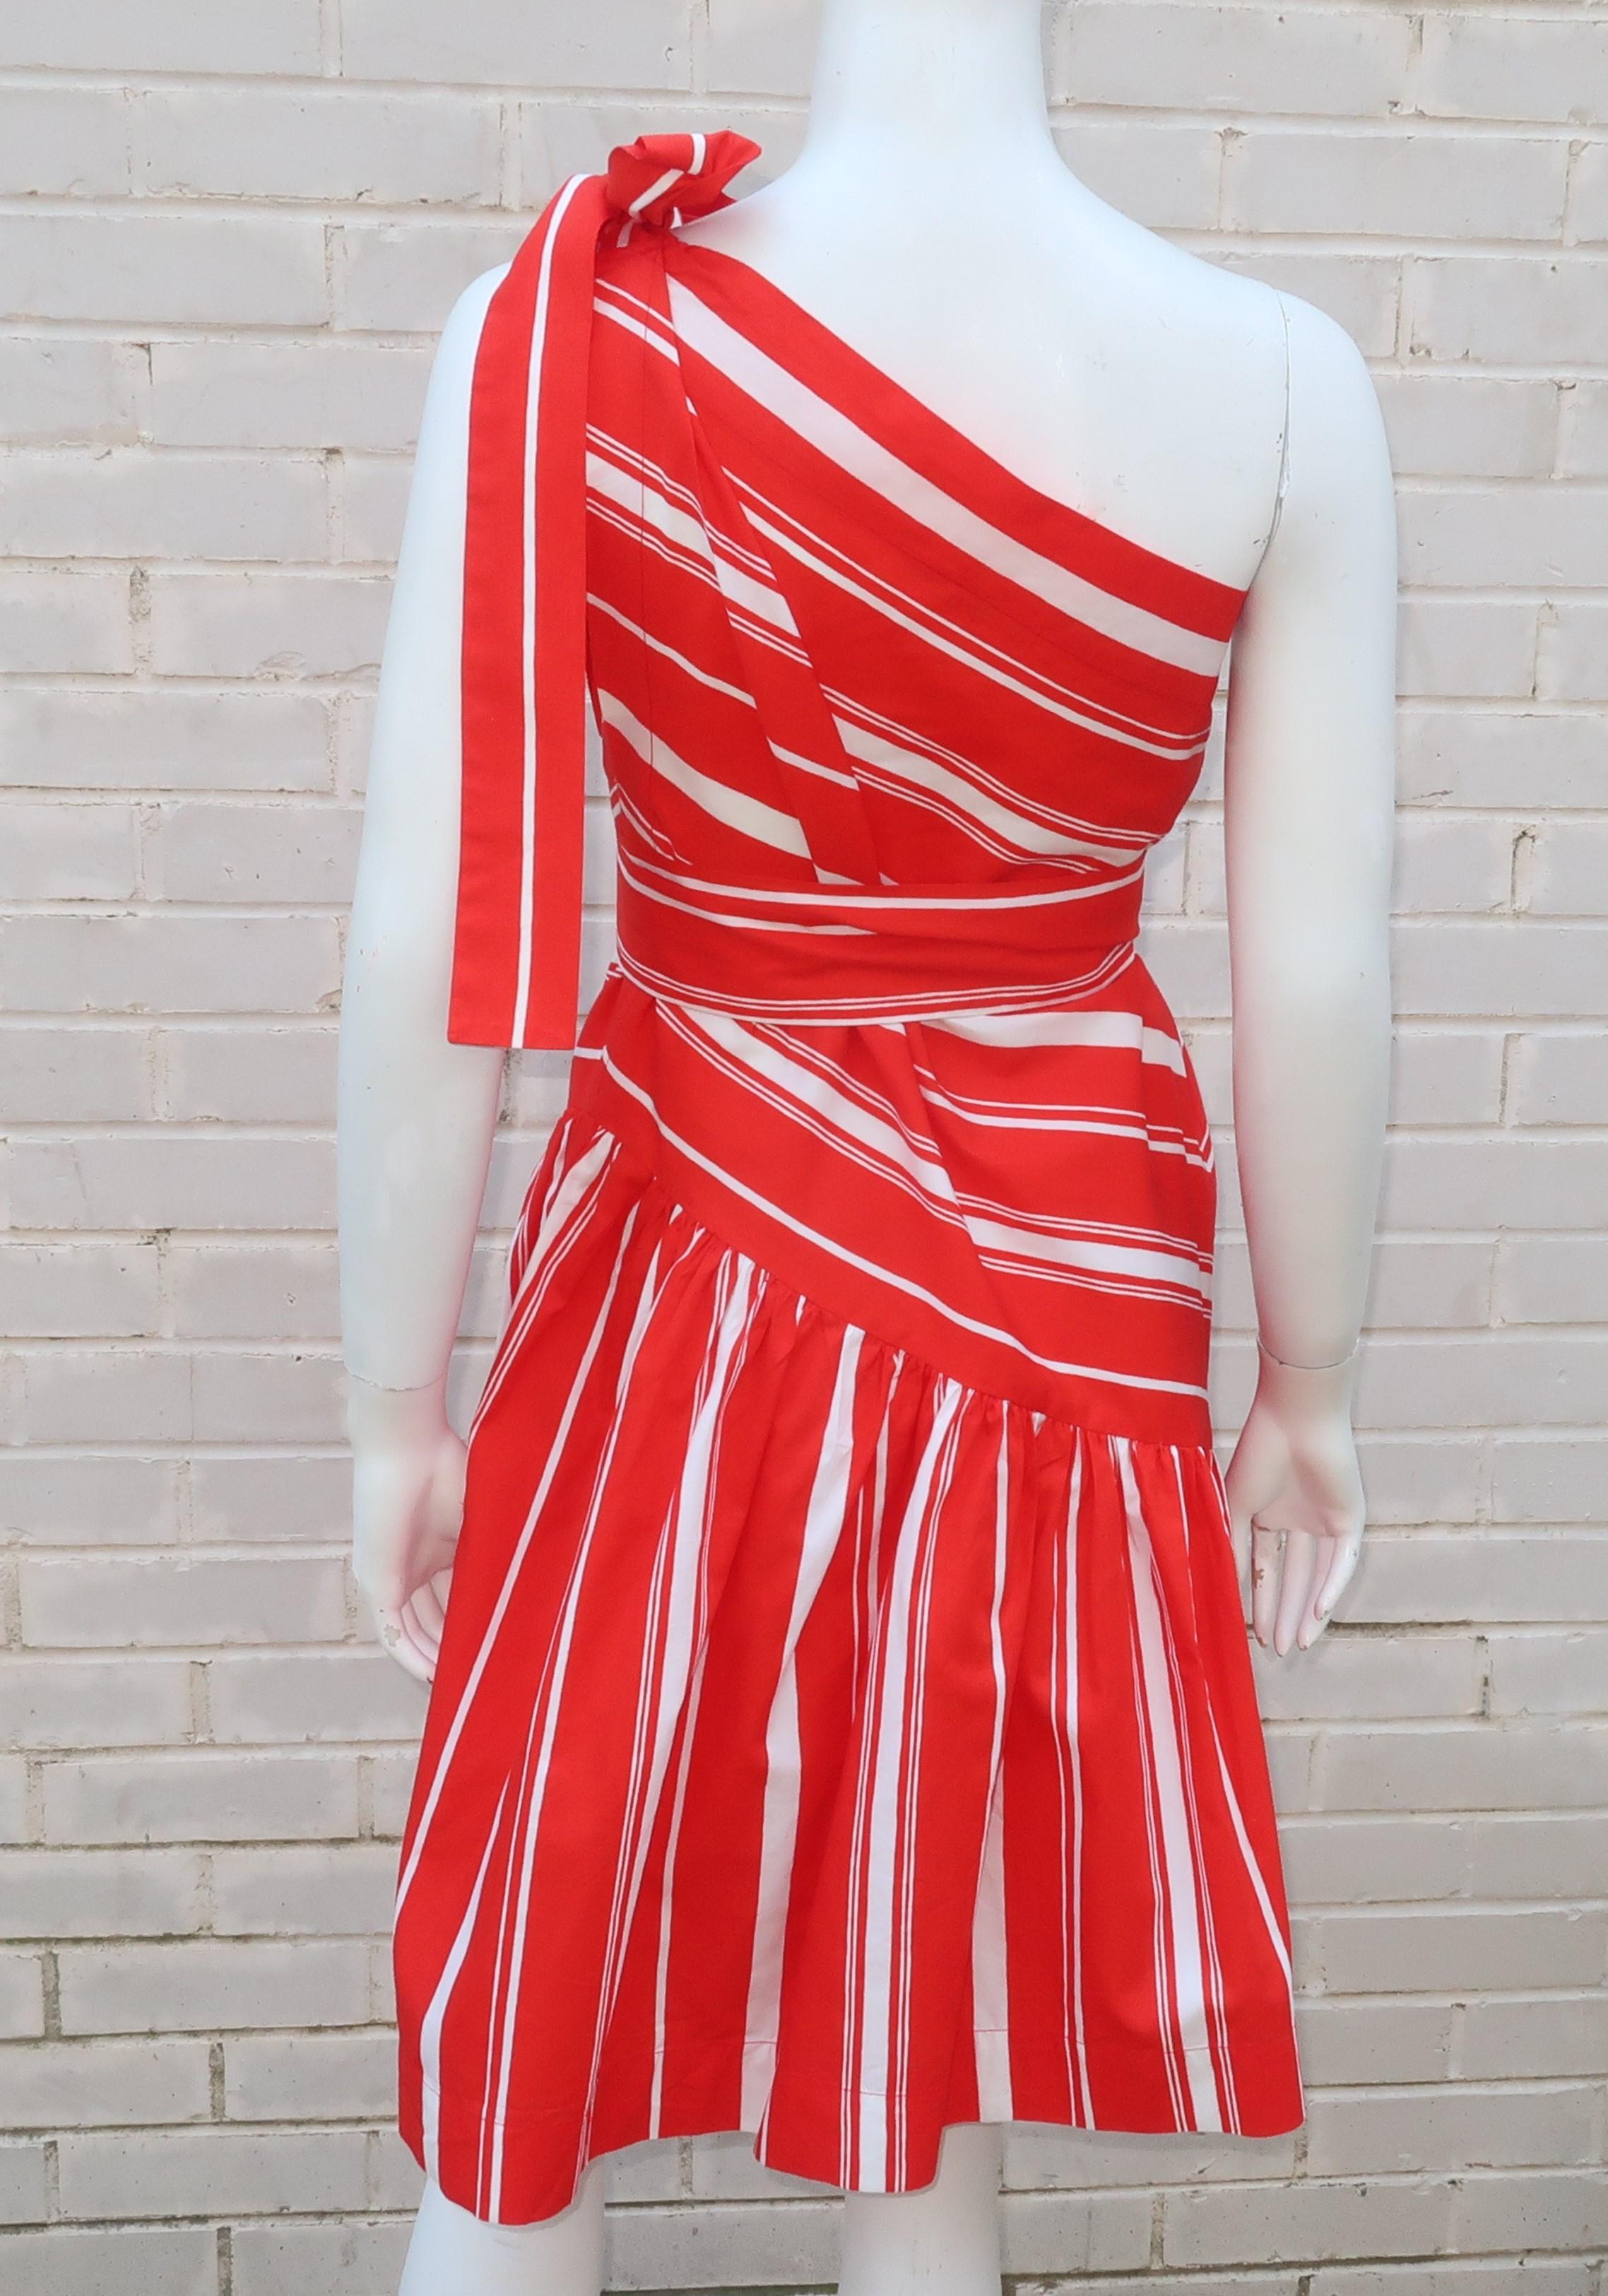 Yves Saint Laurent 1970’s Red & White Candy Stripe Dress 4